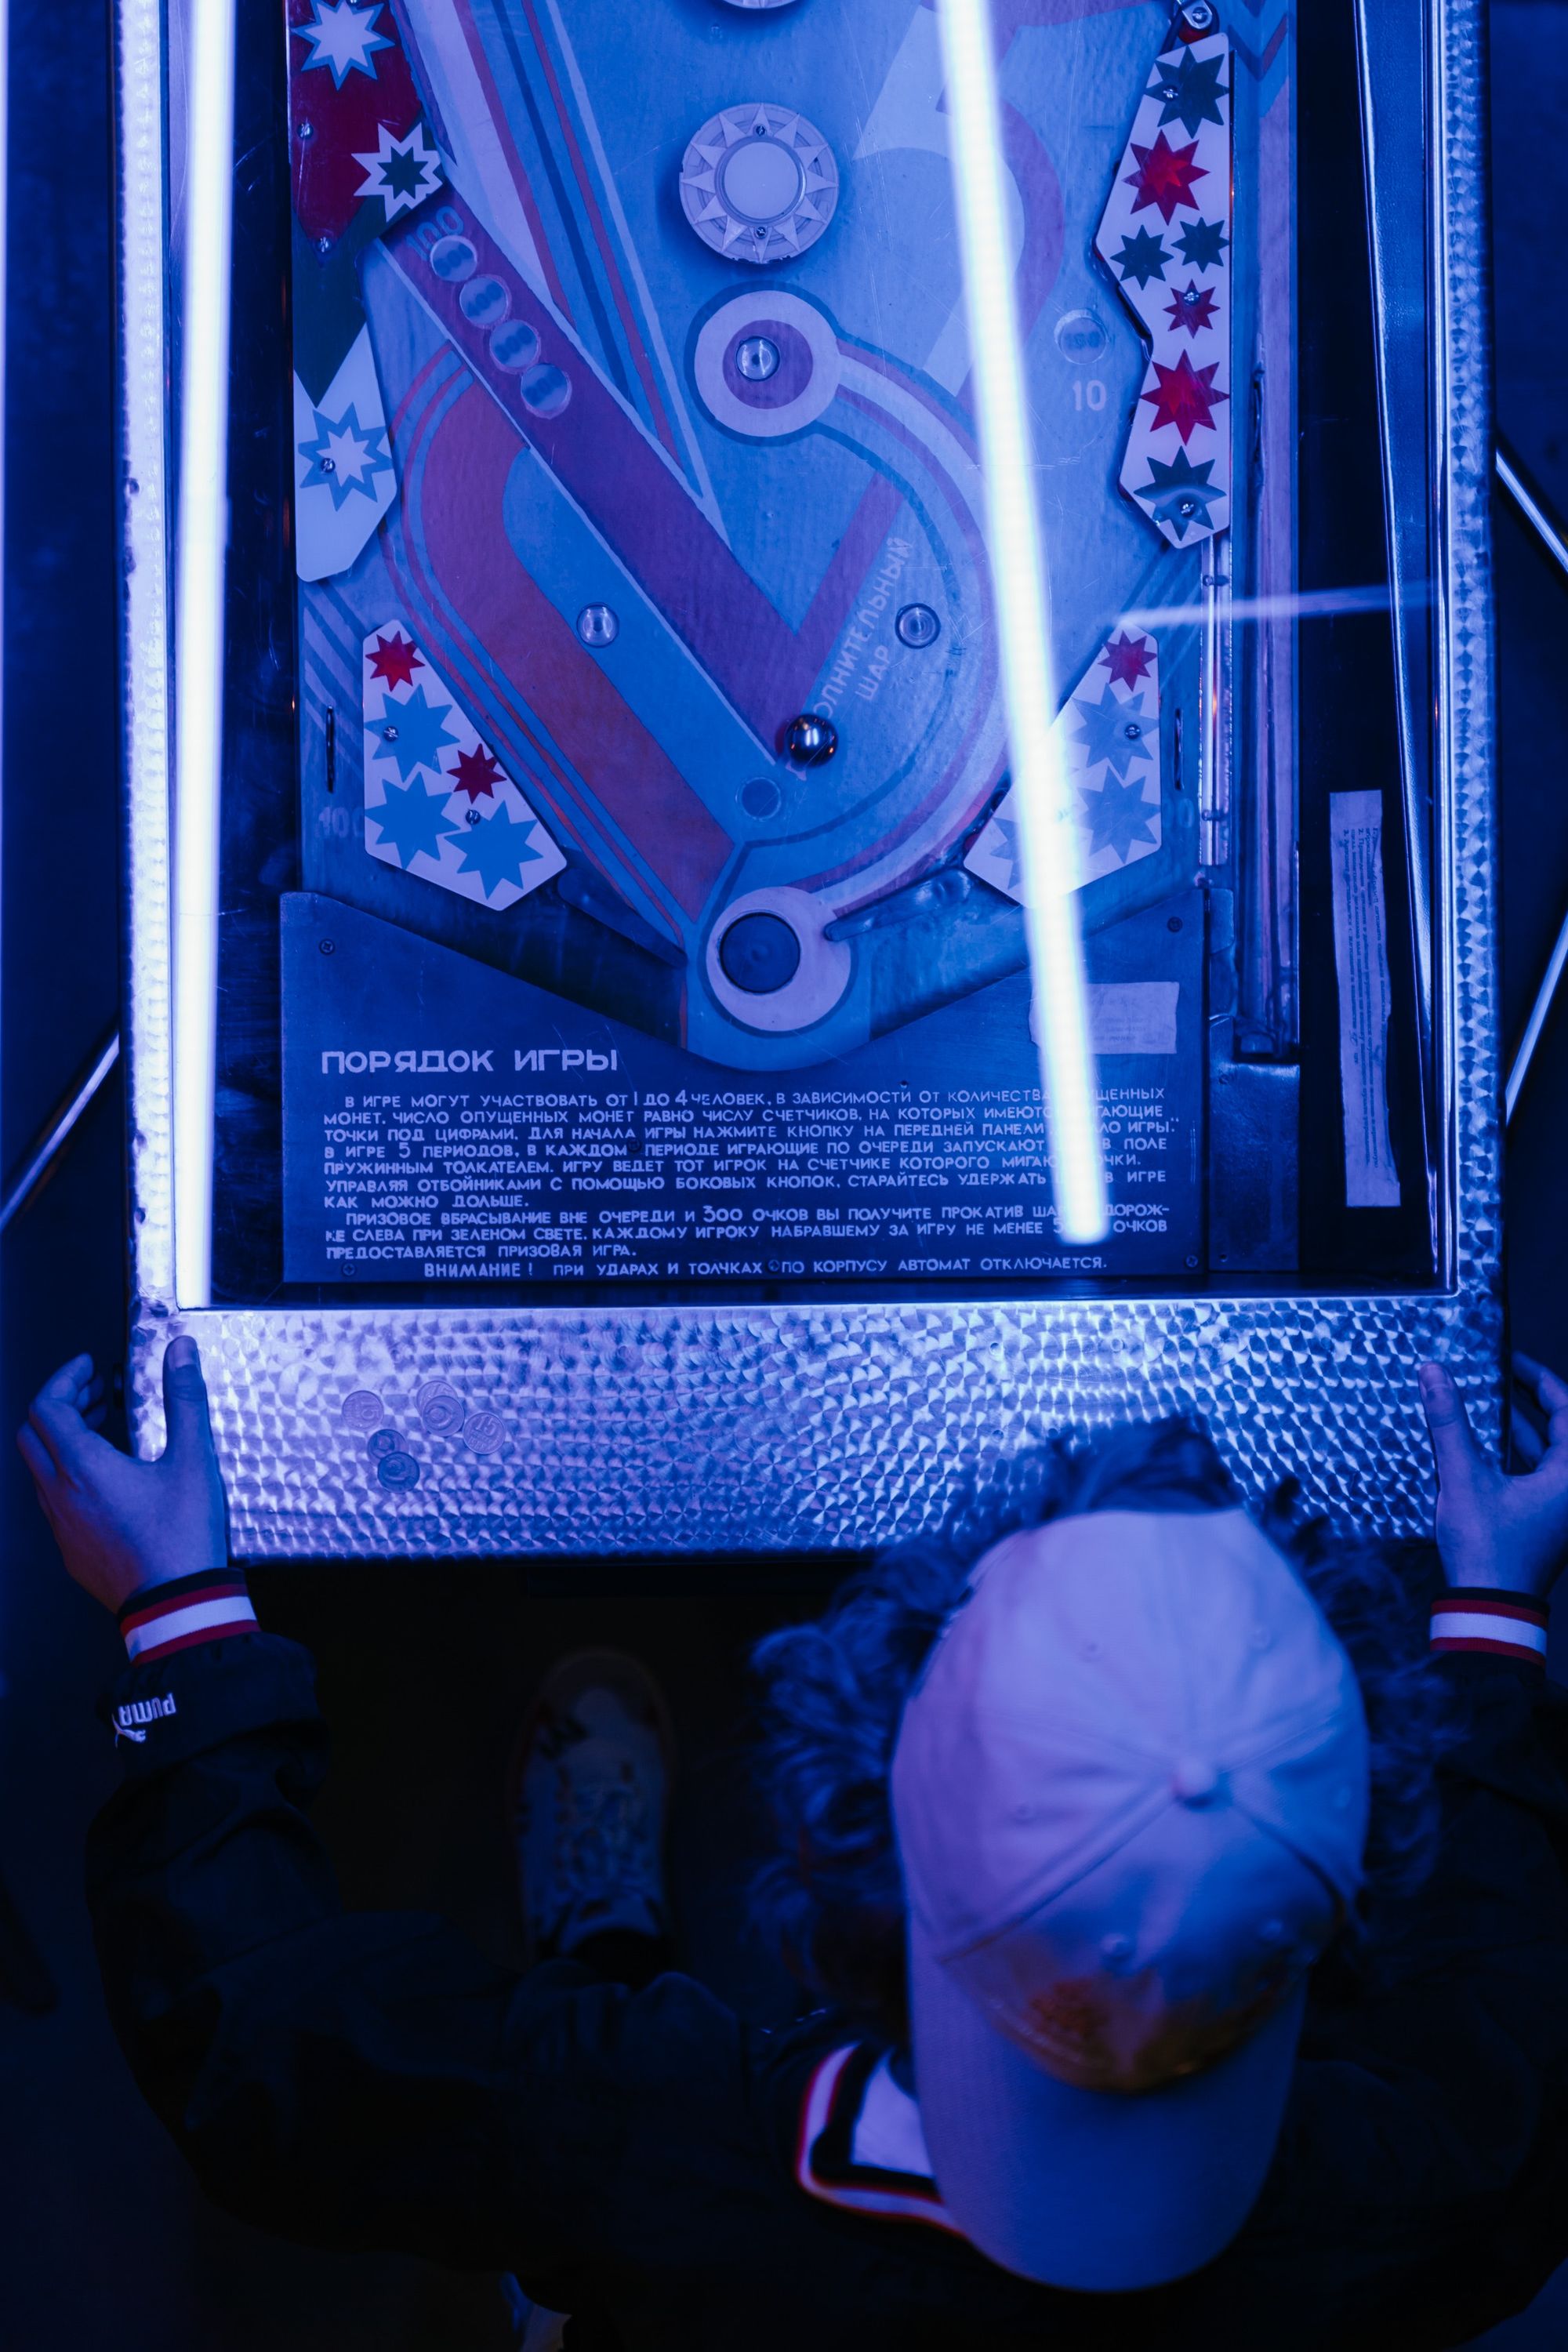 Teenager playing a pinball arcade game